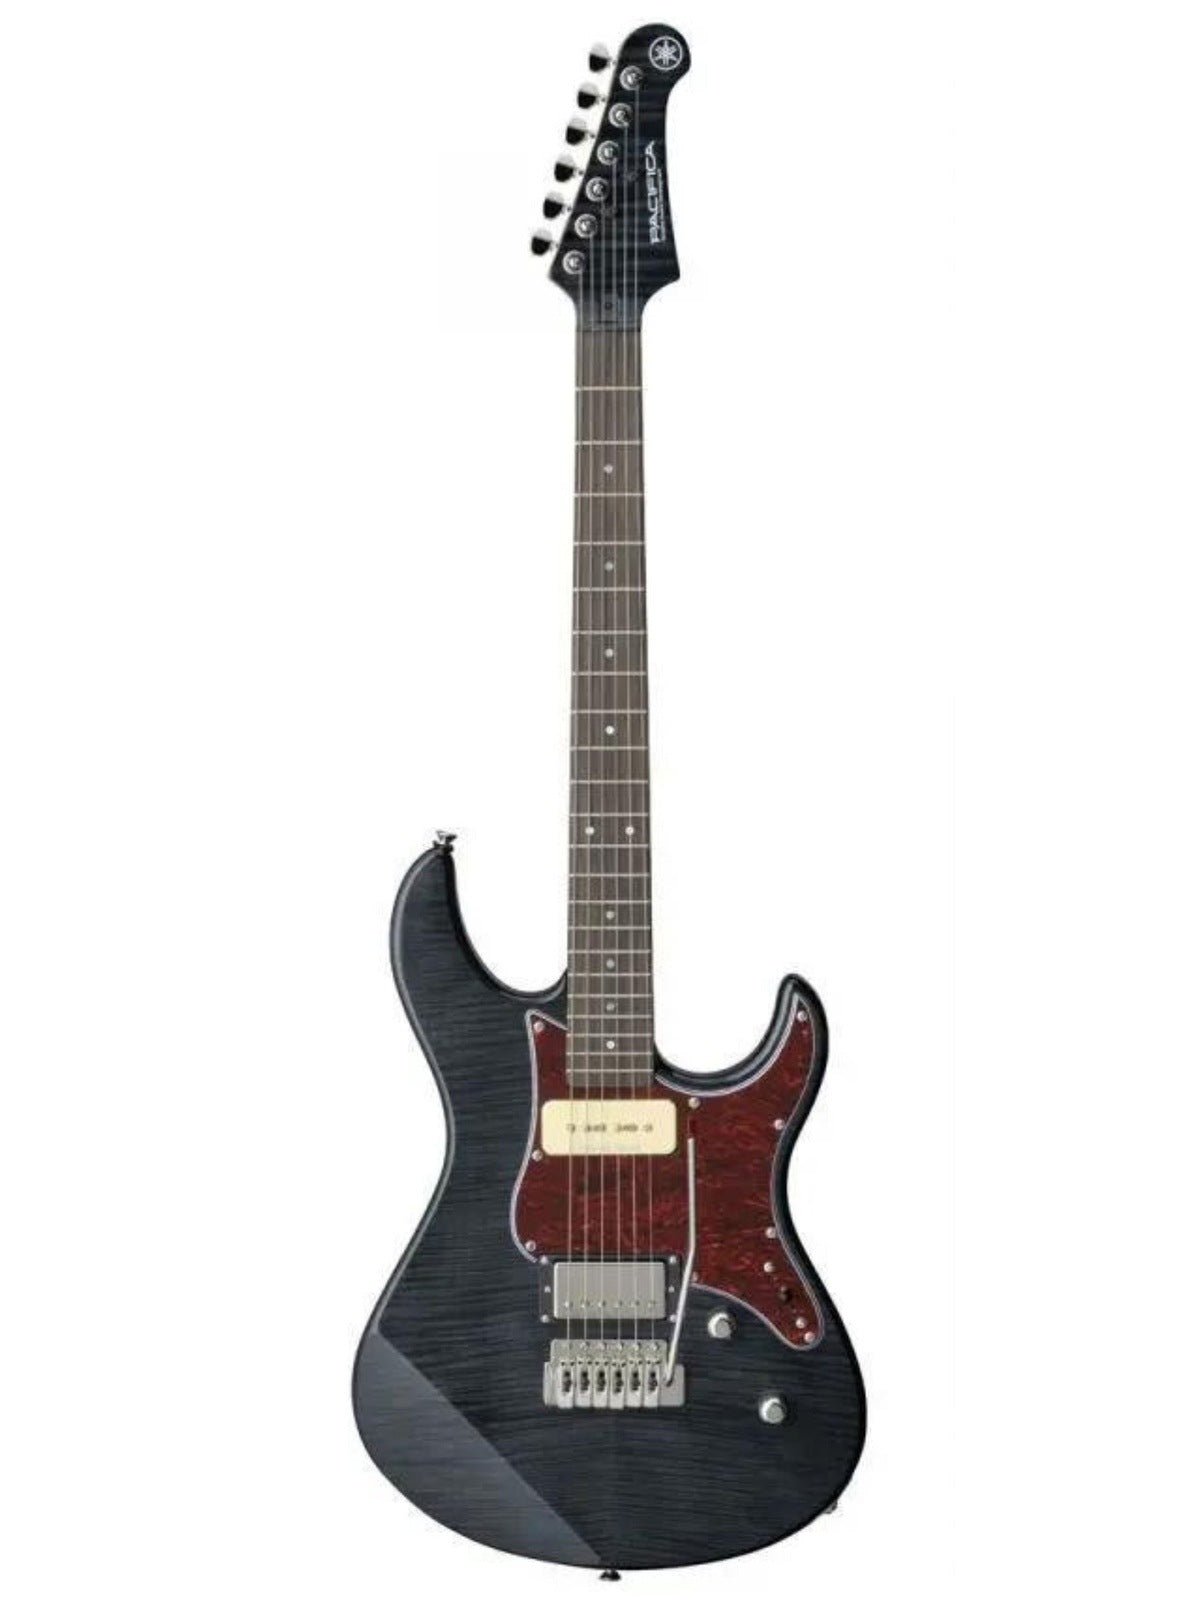 Yamaha Pacifica 611VFM Electric Guitar